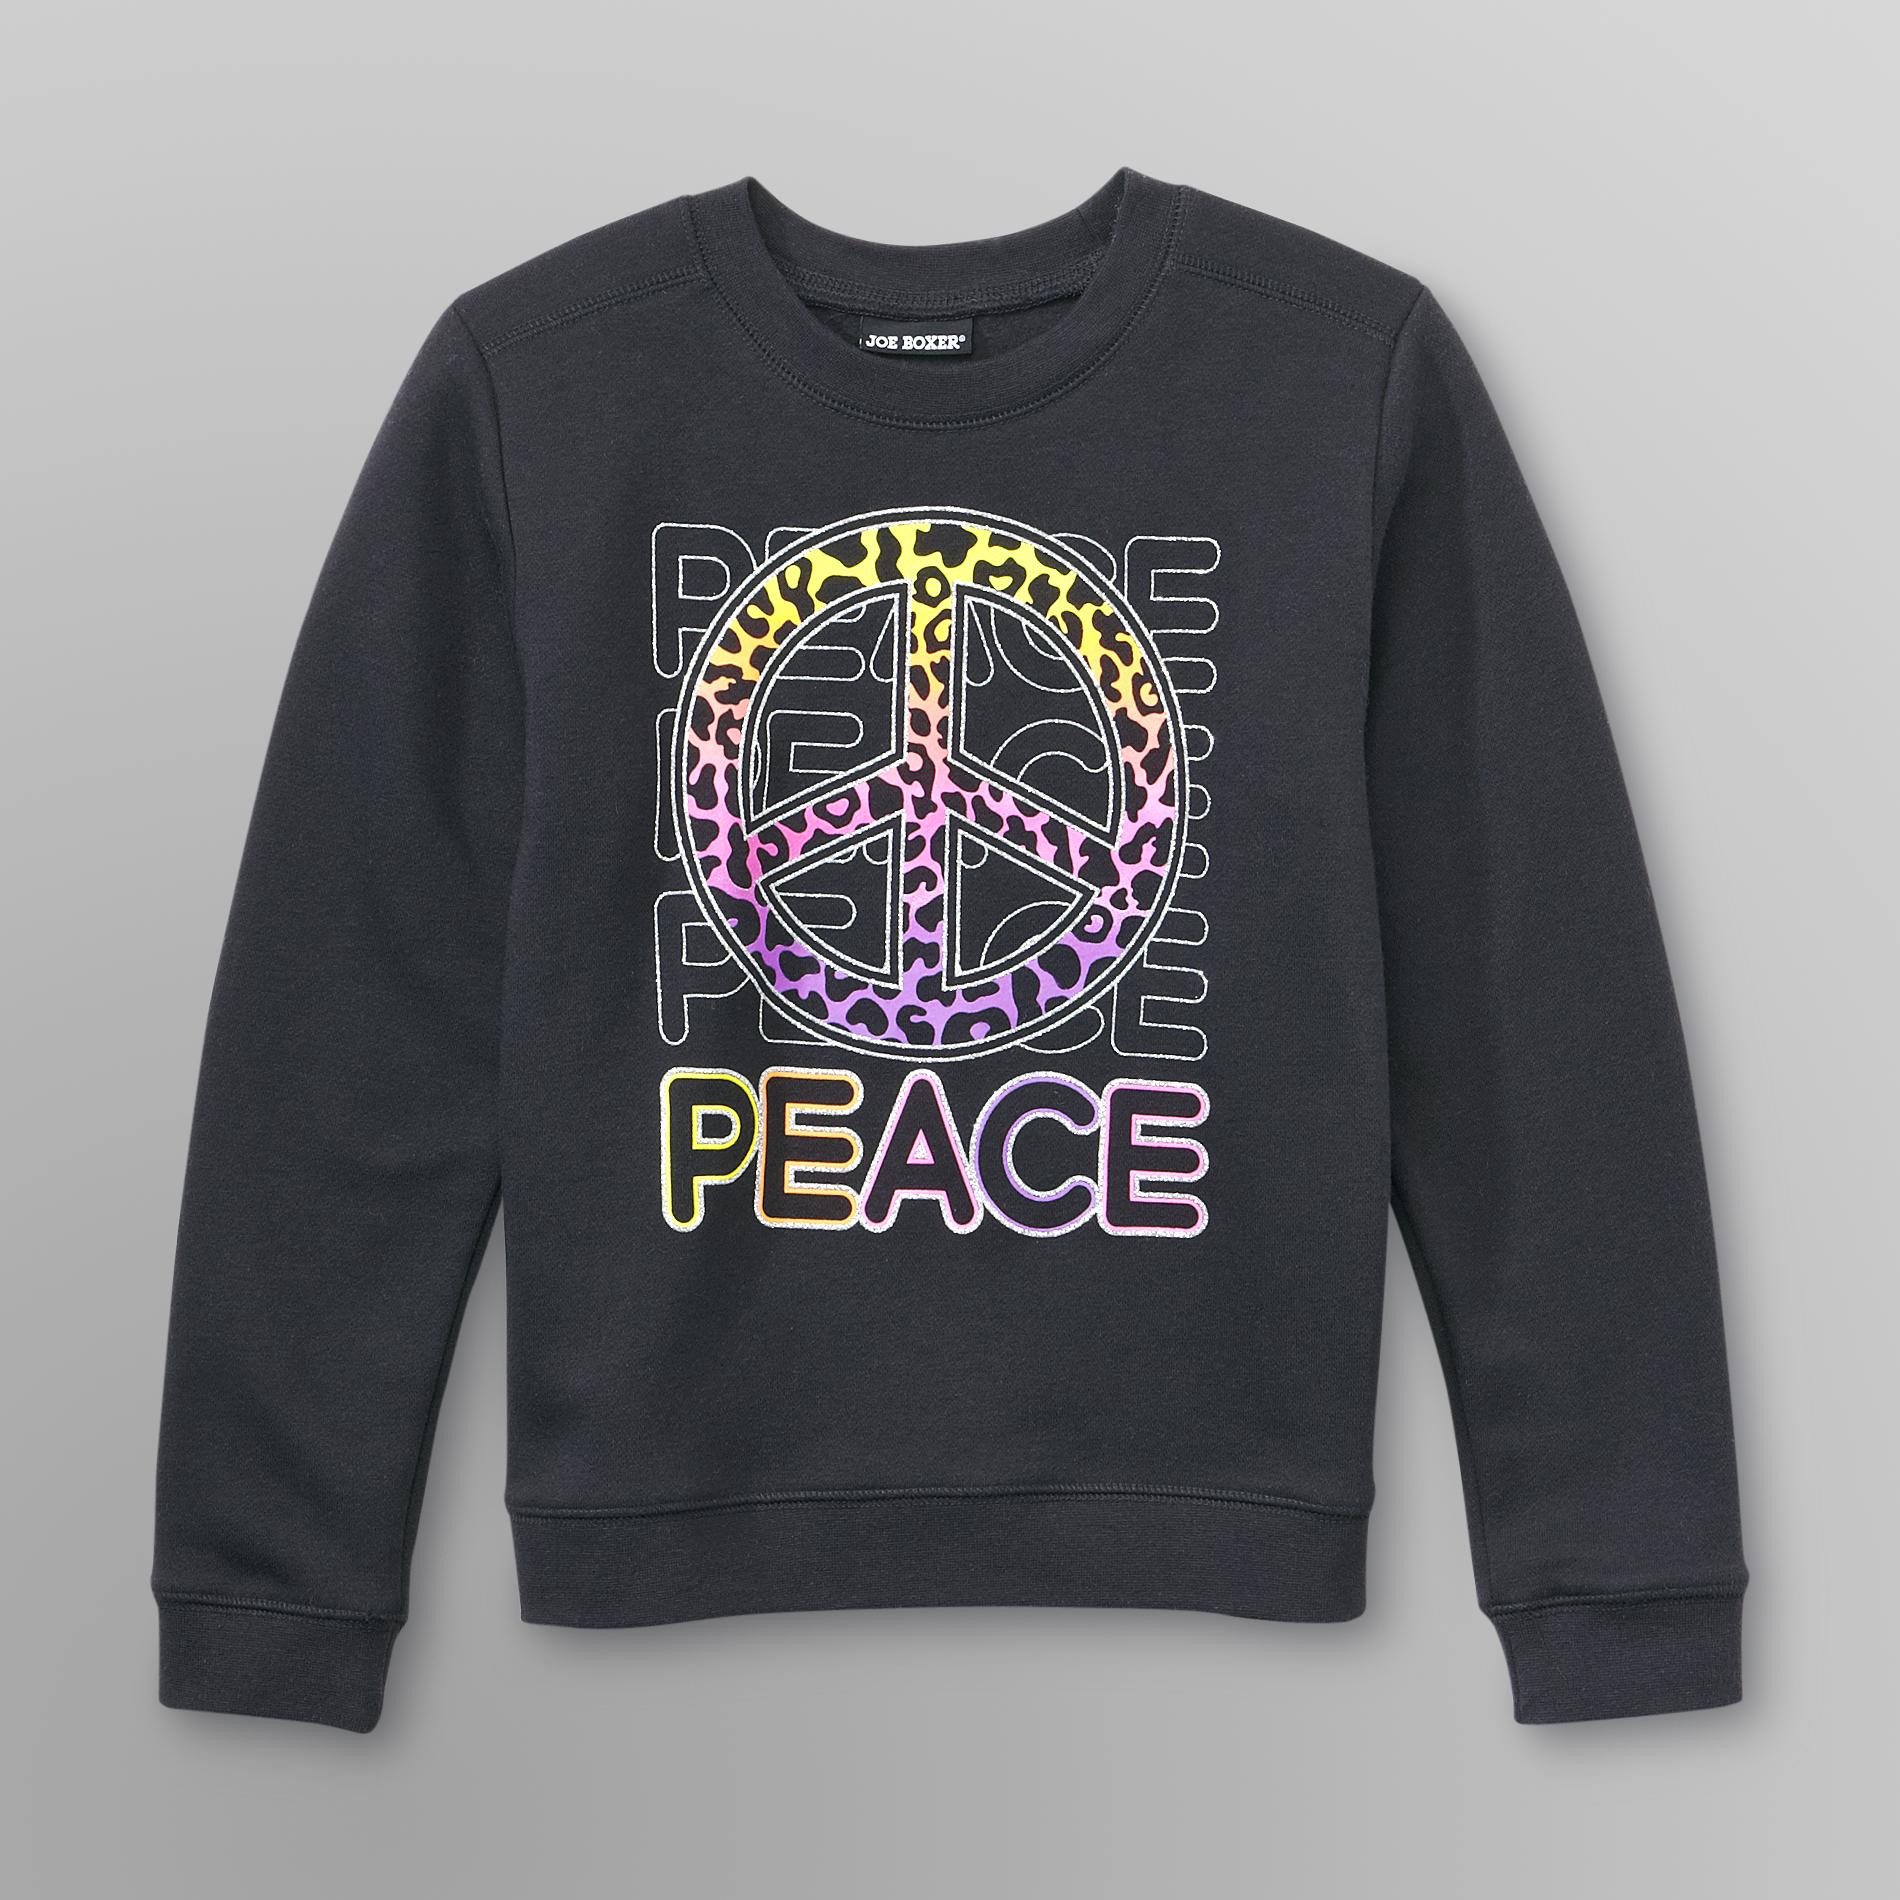 Joe Boxer Girl's Graphic Sweatshirt - Peace Sign